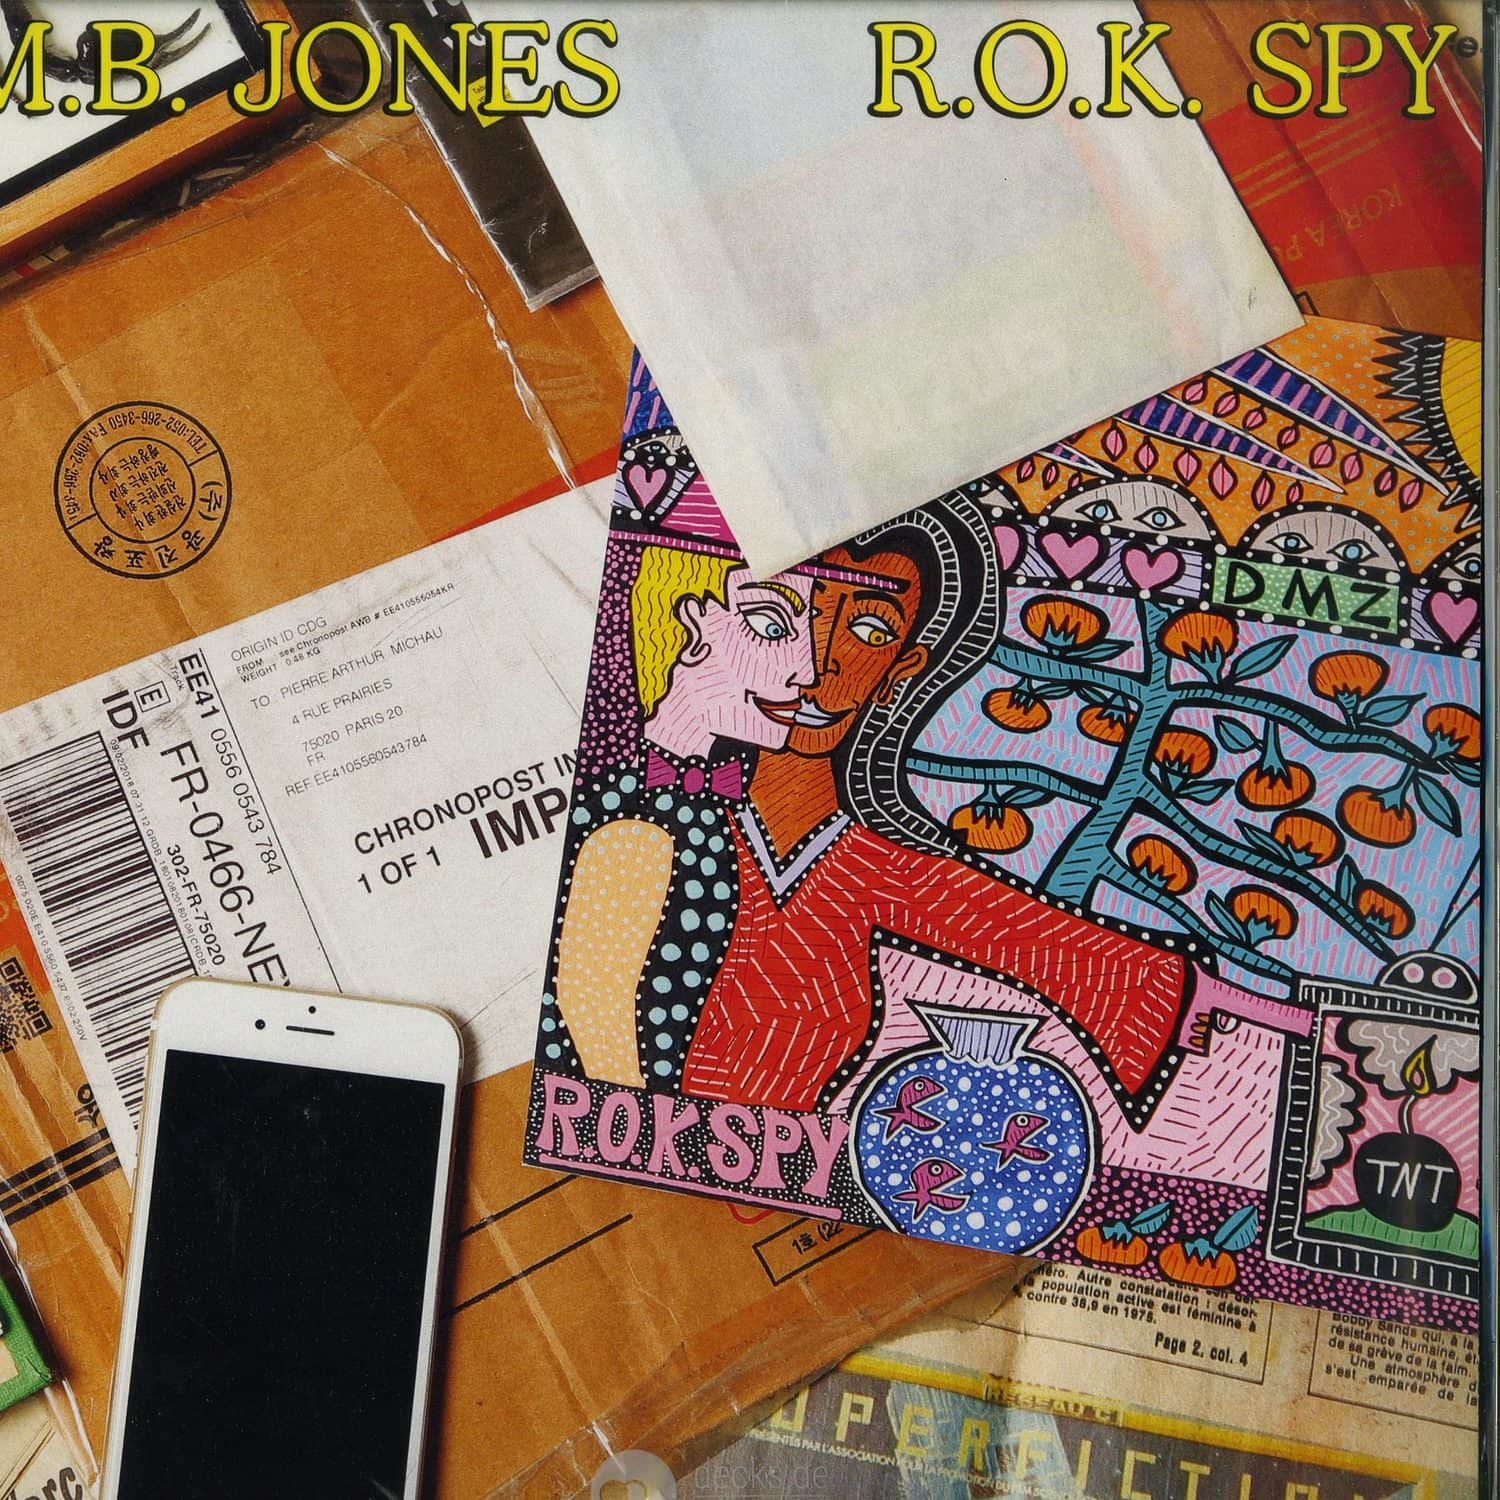 MB Jones - ROK SPY 